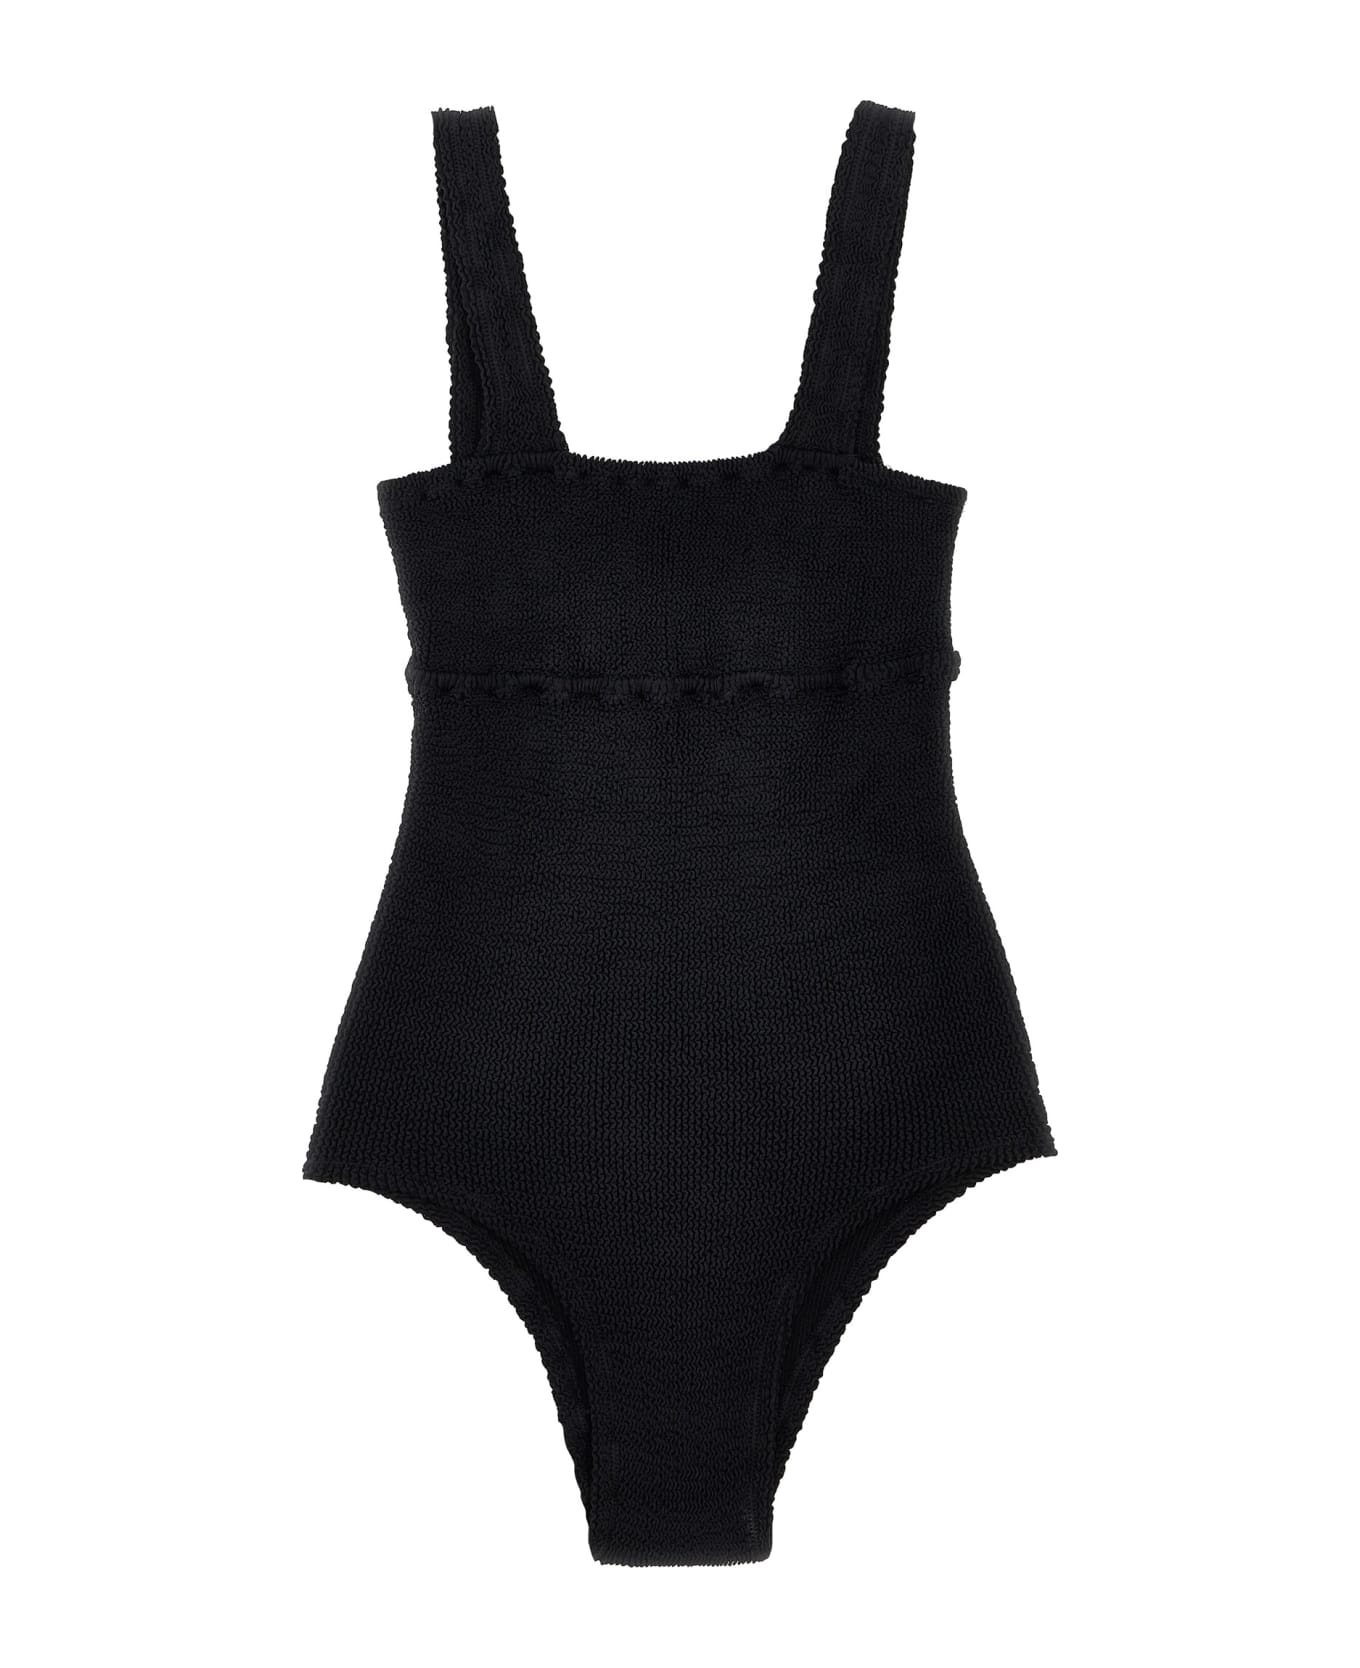 Reina Olga 'lucia' One-piece Swimsuit - Black  